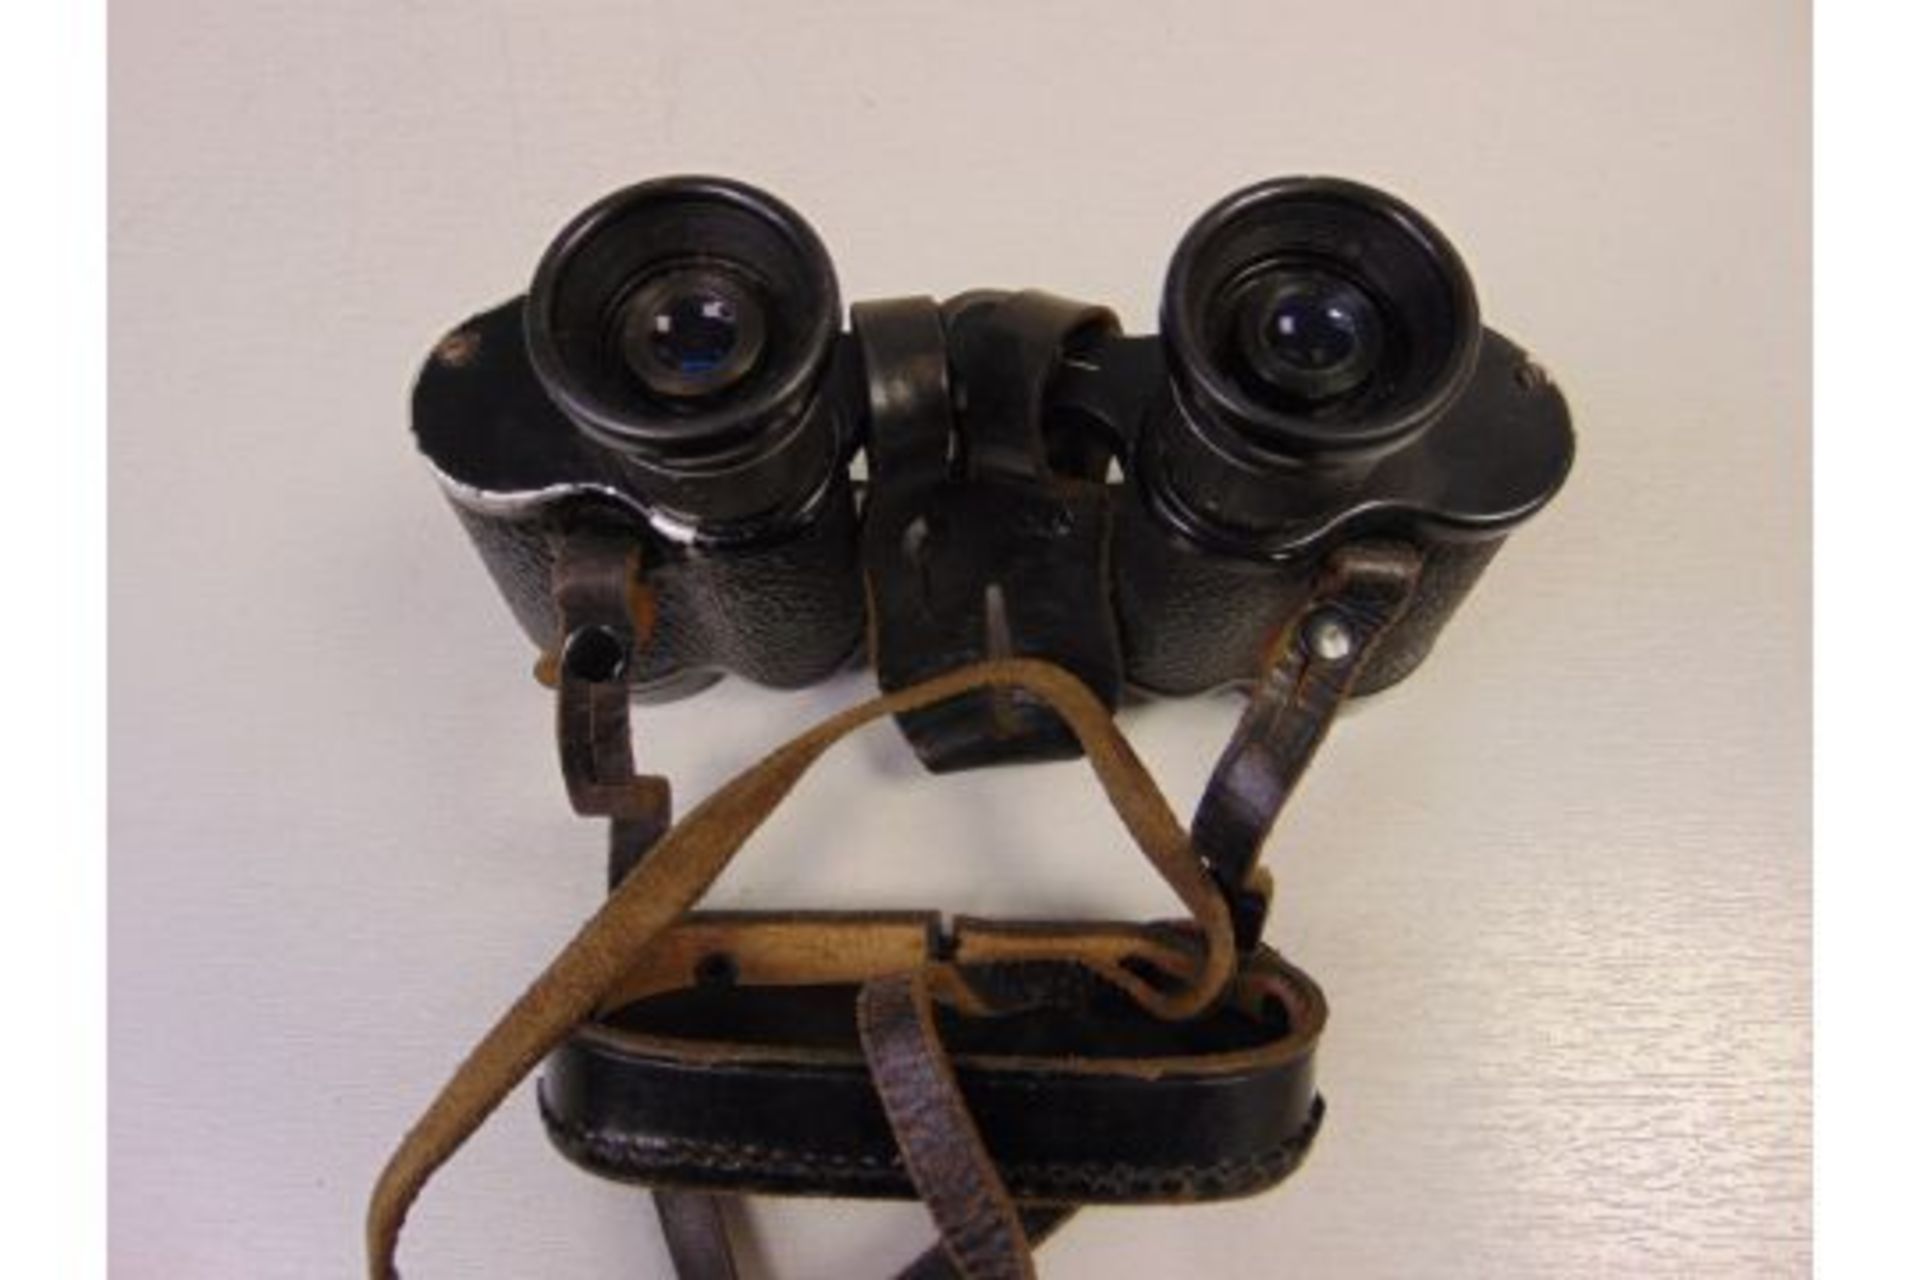 NIFE 6 x 30 Binoculars in Original Leather Case dated 1948 - Image 4 of 9